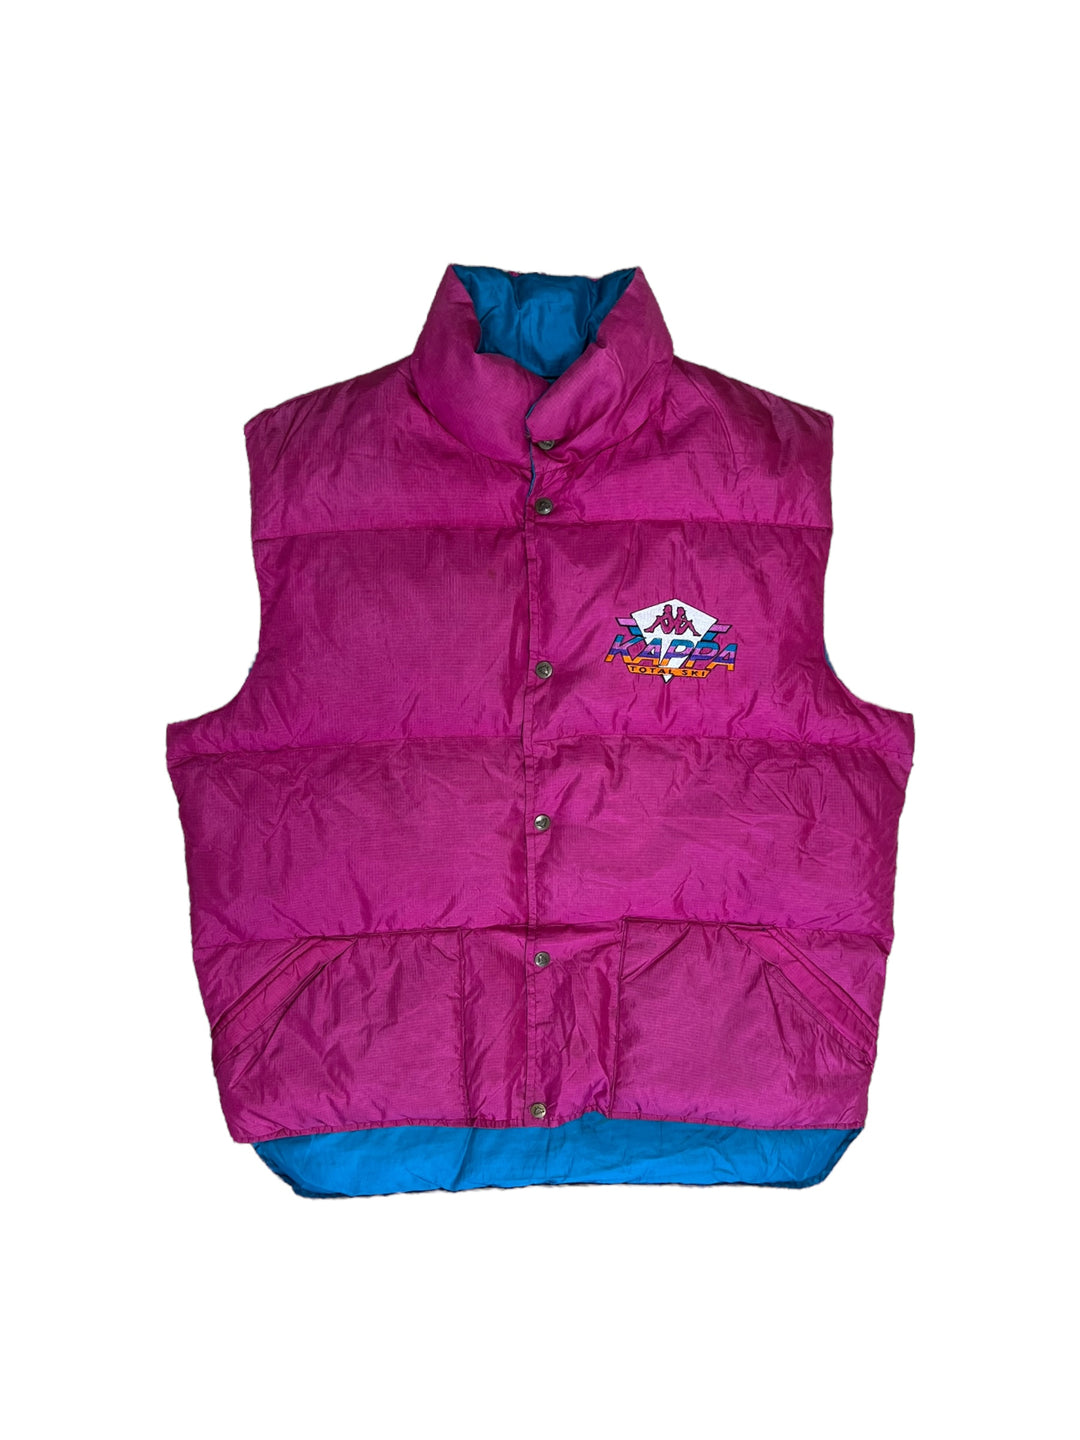 Kappa vintage reversible ski vest jacket Men’s Extra Large